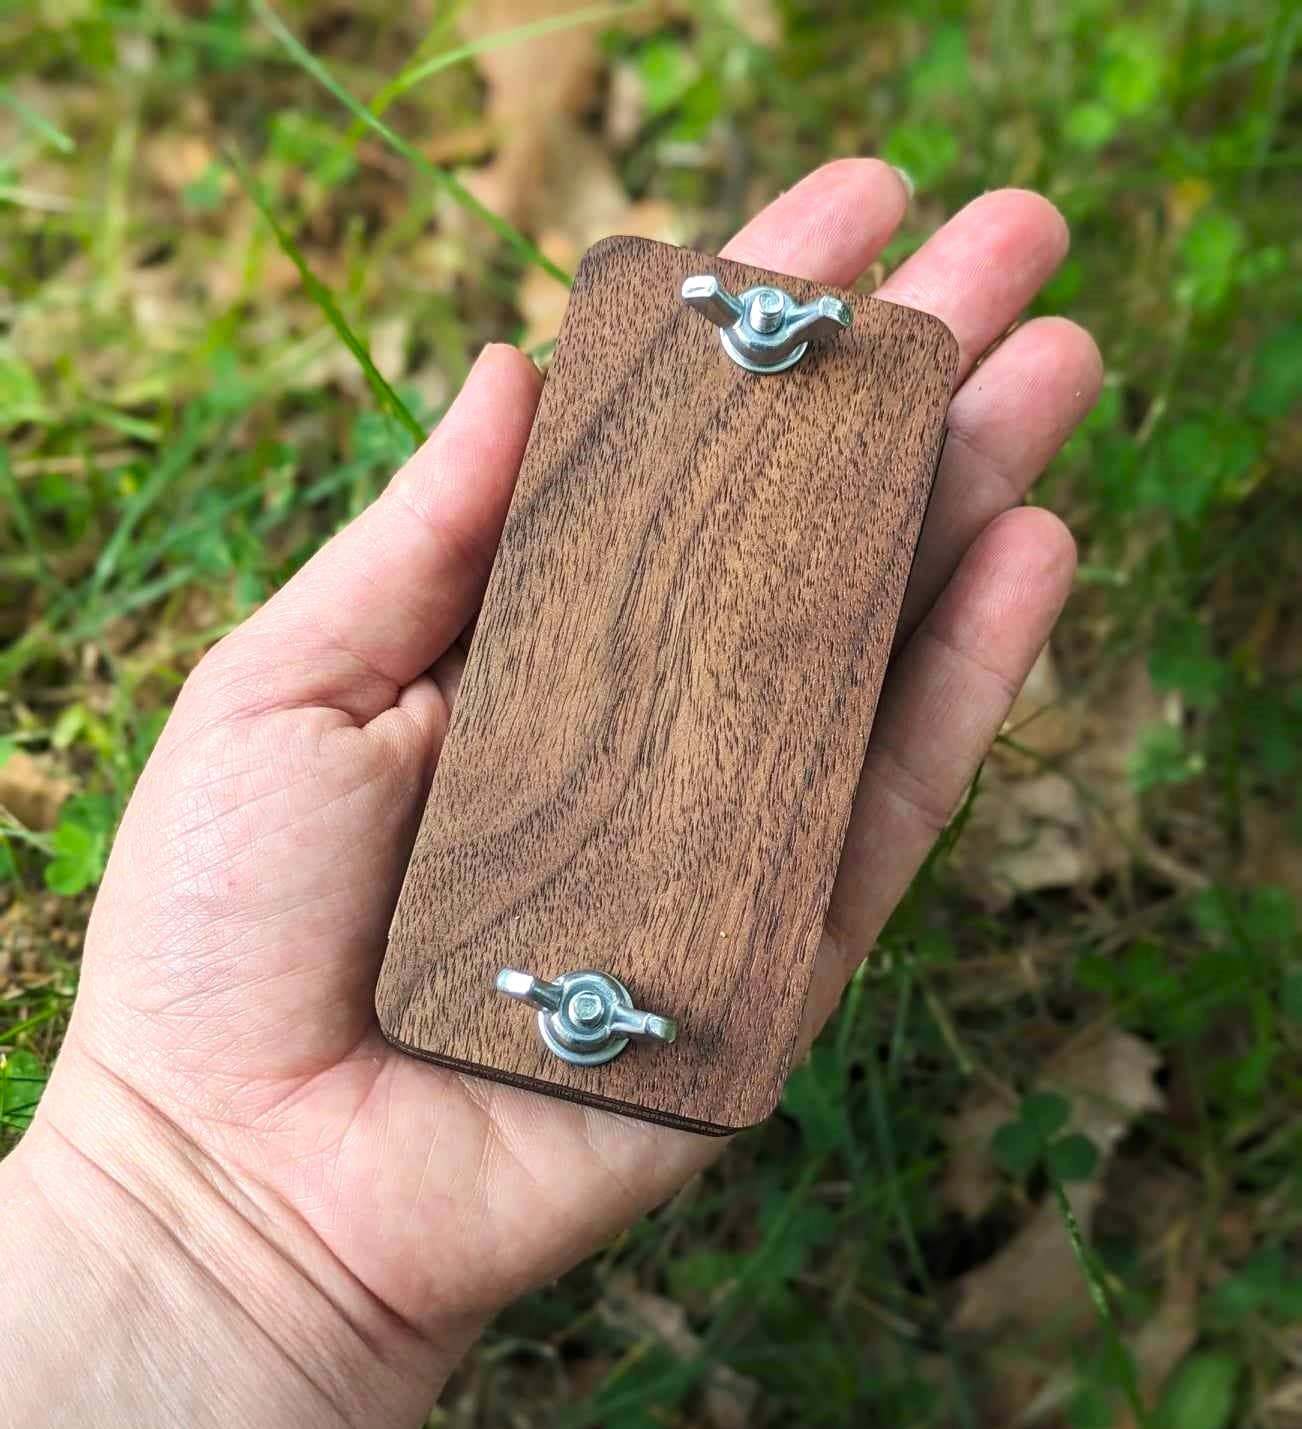 Pocket Sized Flower Press Made From Real Hardwood: Walnut